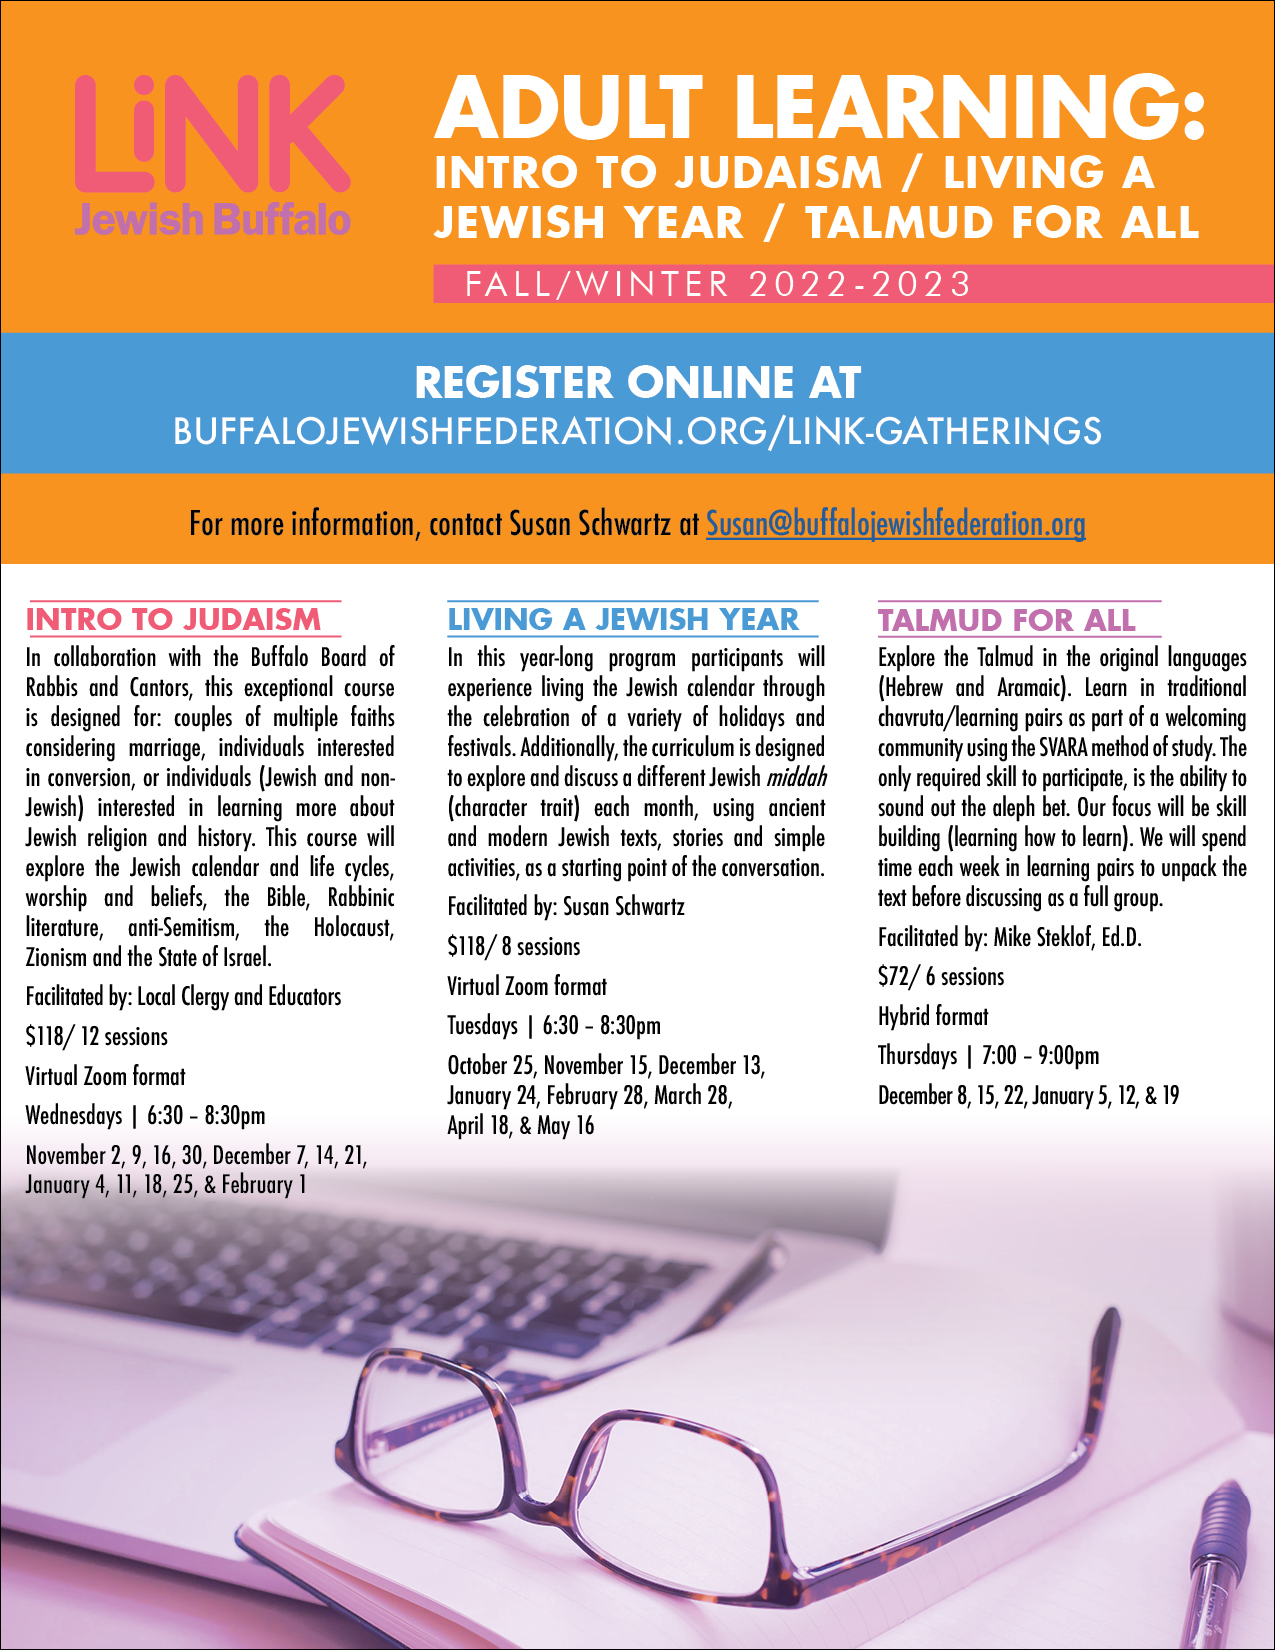 Talmud for All - LiNK Intro JewishYear Talmud Fall22